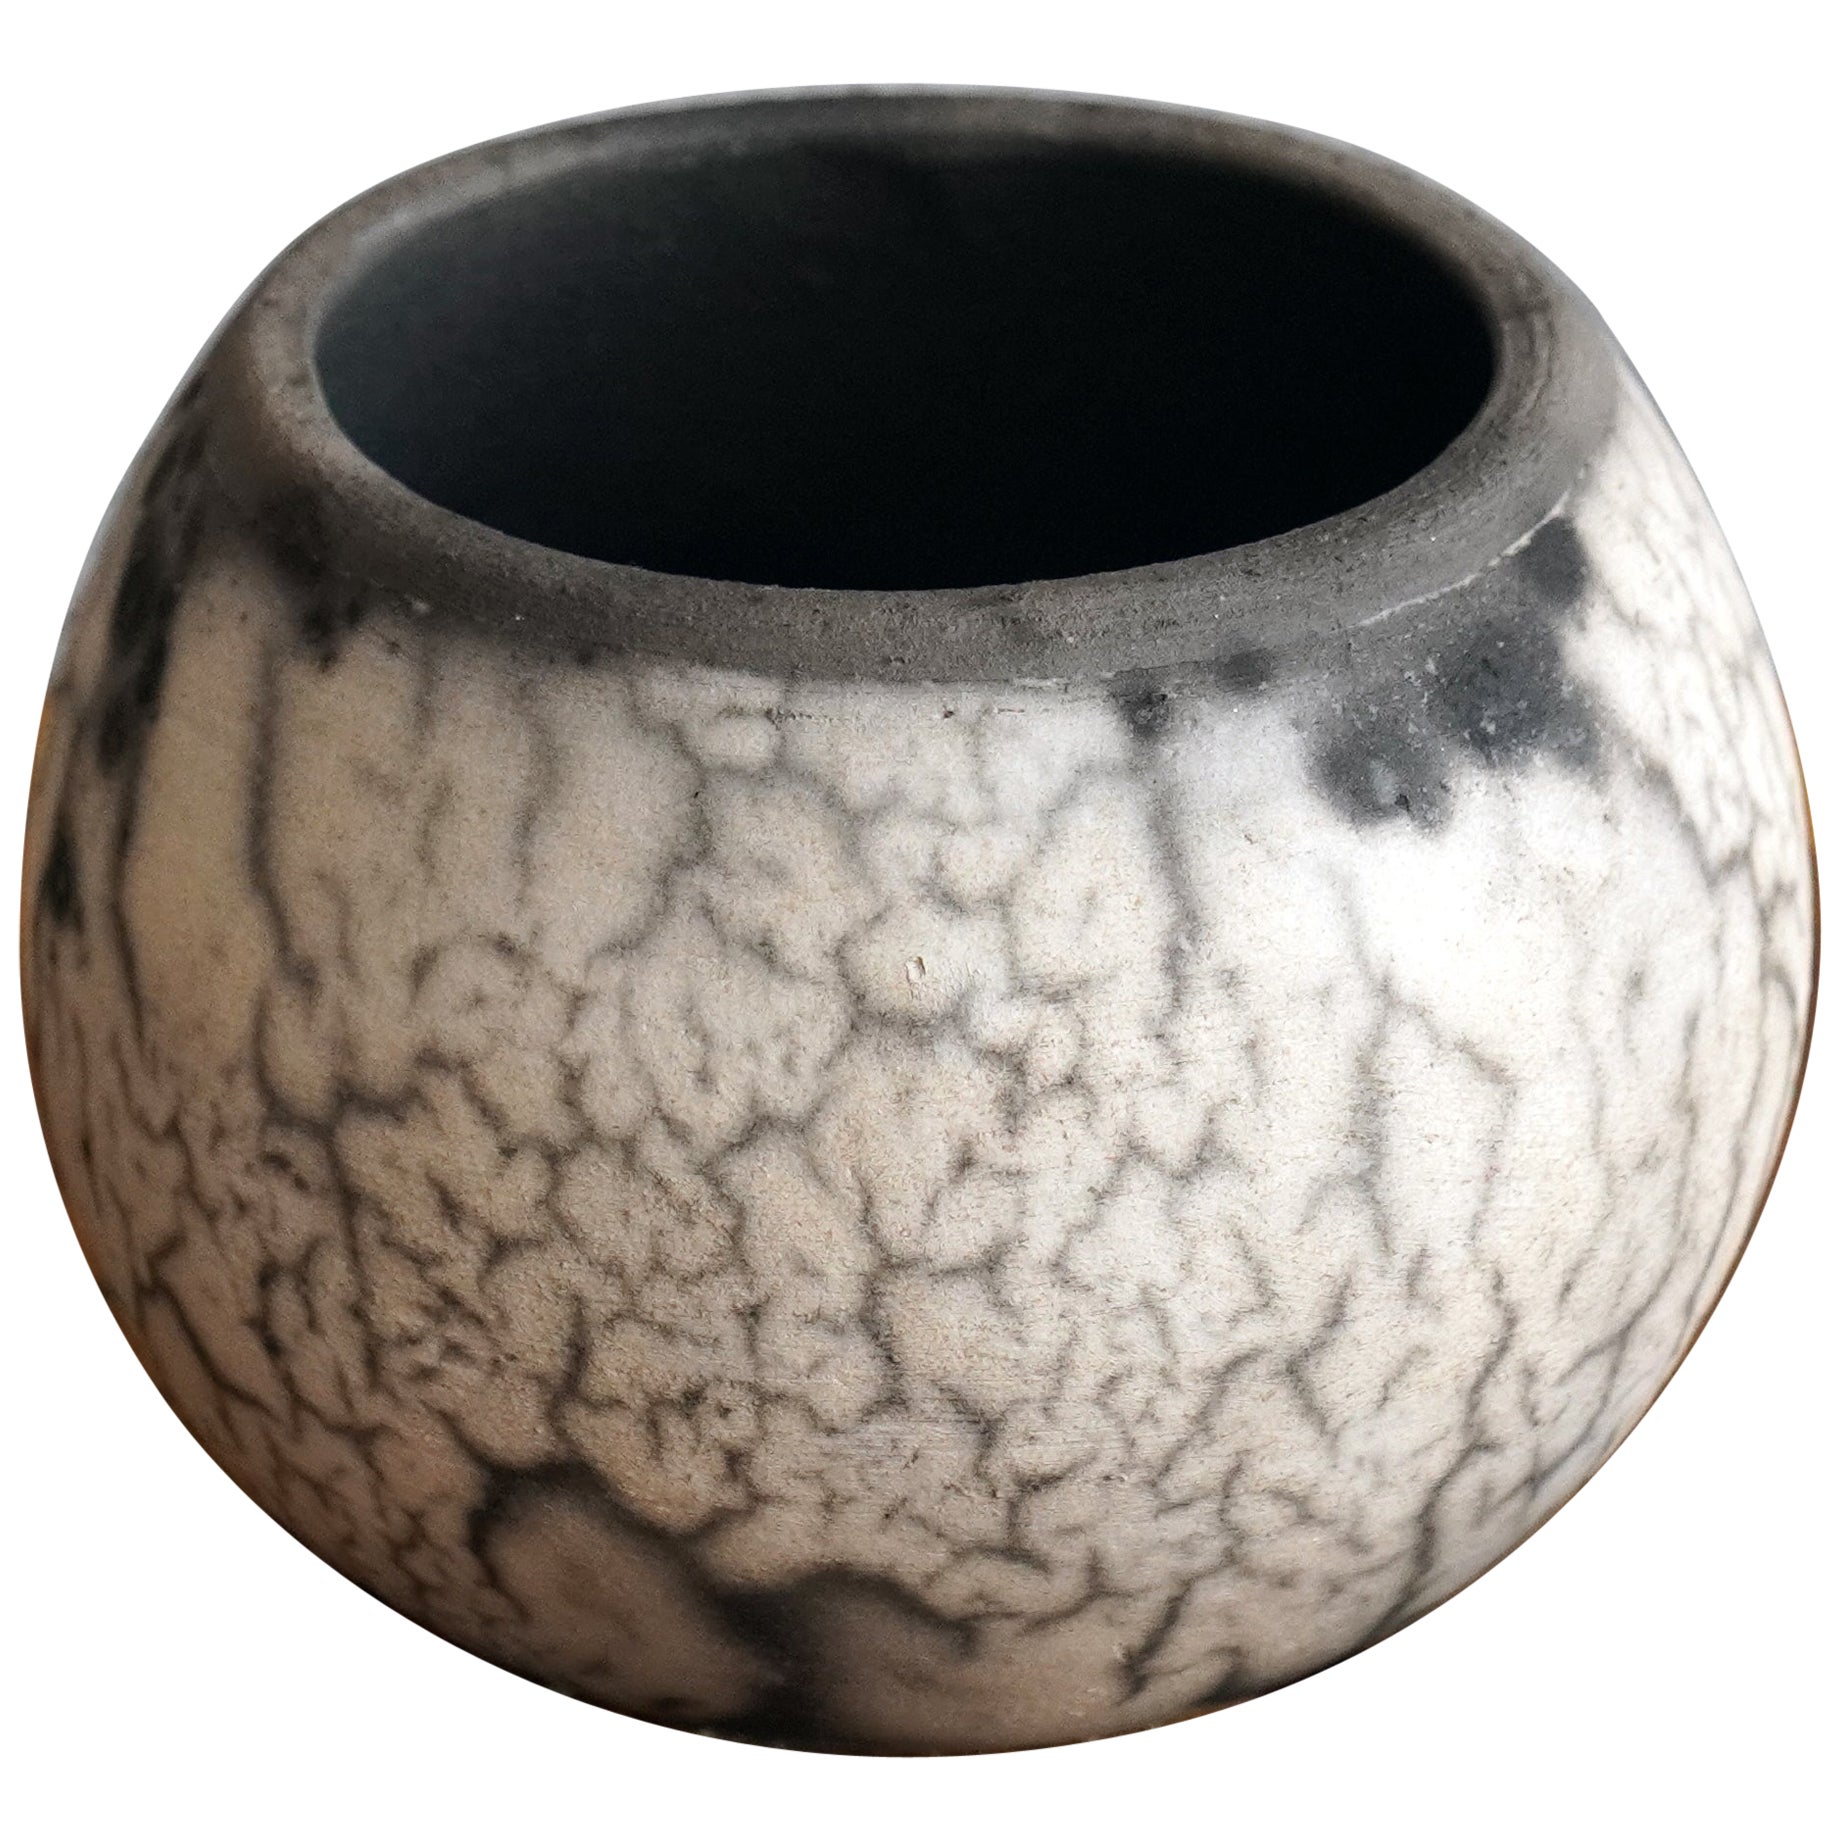 Zen Raku Pottery Vase - Smoked Raku - Handmade Ceramic Home Decor Gift For Sale